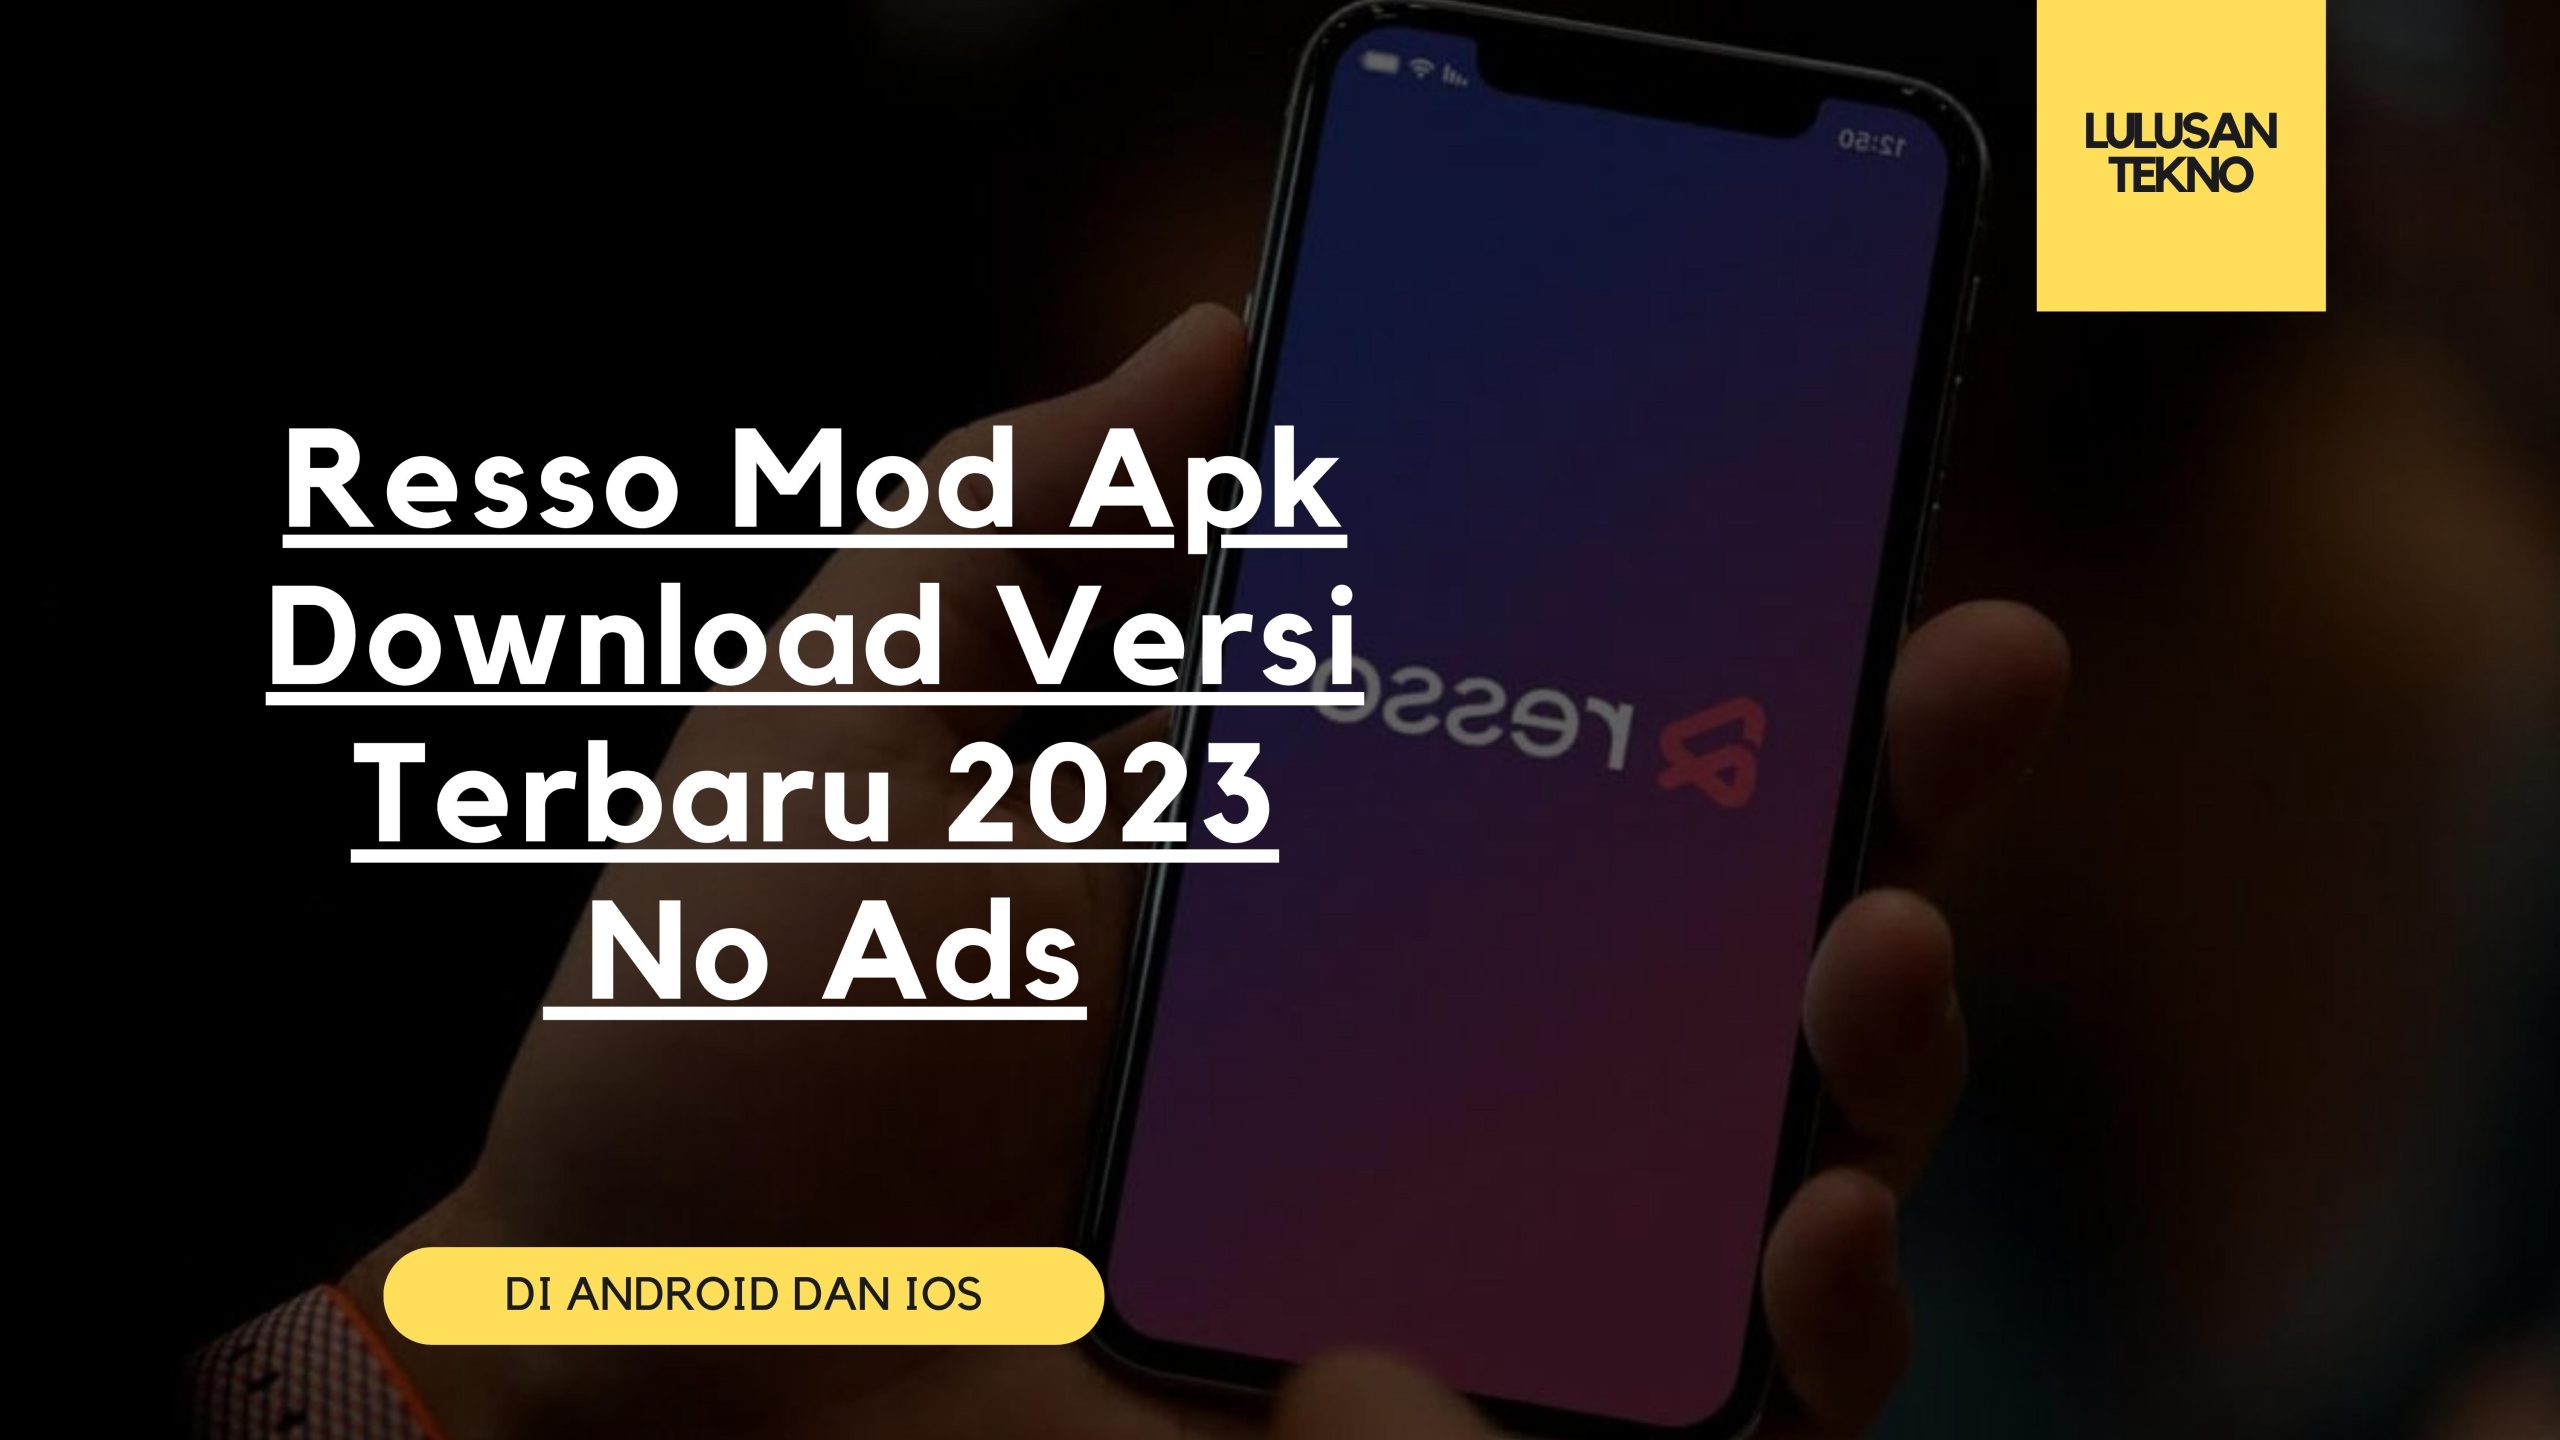 Resso Mod Apk Download Versi Terbaru 2023 No Ads